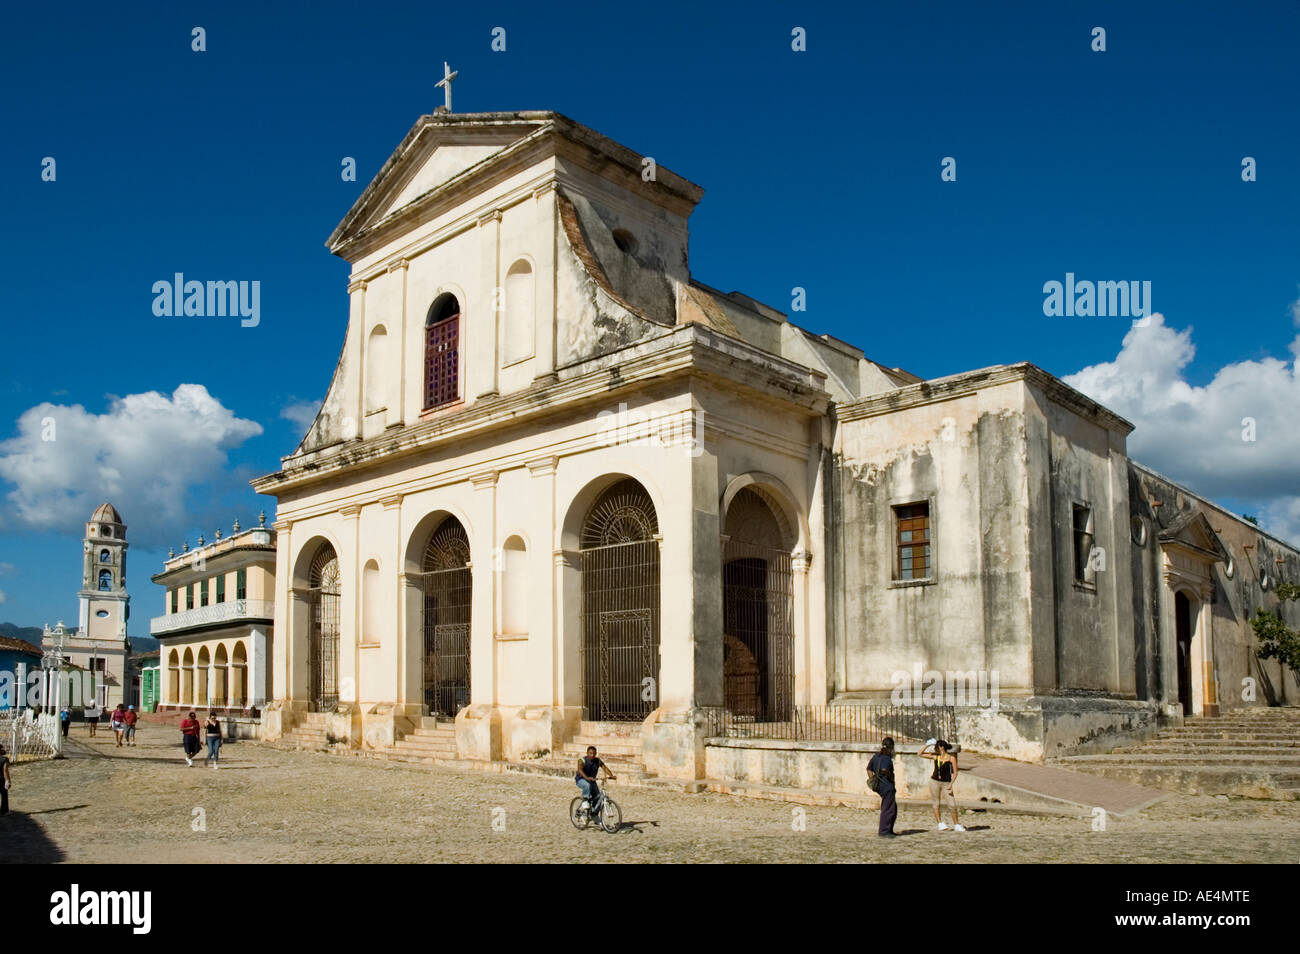 The neoclassical facade of the Church of the Holy Trinity (Iglesia de la Santísima Trinidad), completed in 1892, Trinidad, Cuba Stock Photo